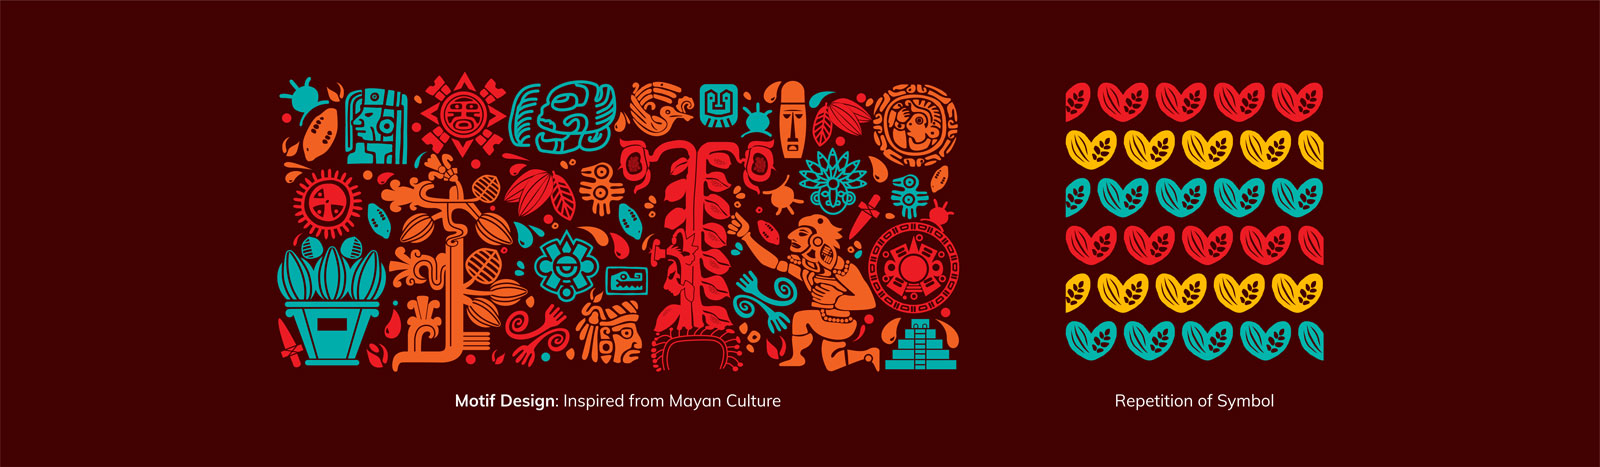 Motif Design of Mayan culture